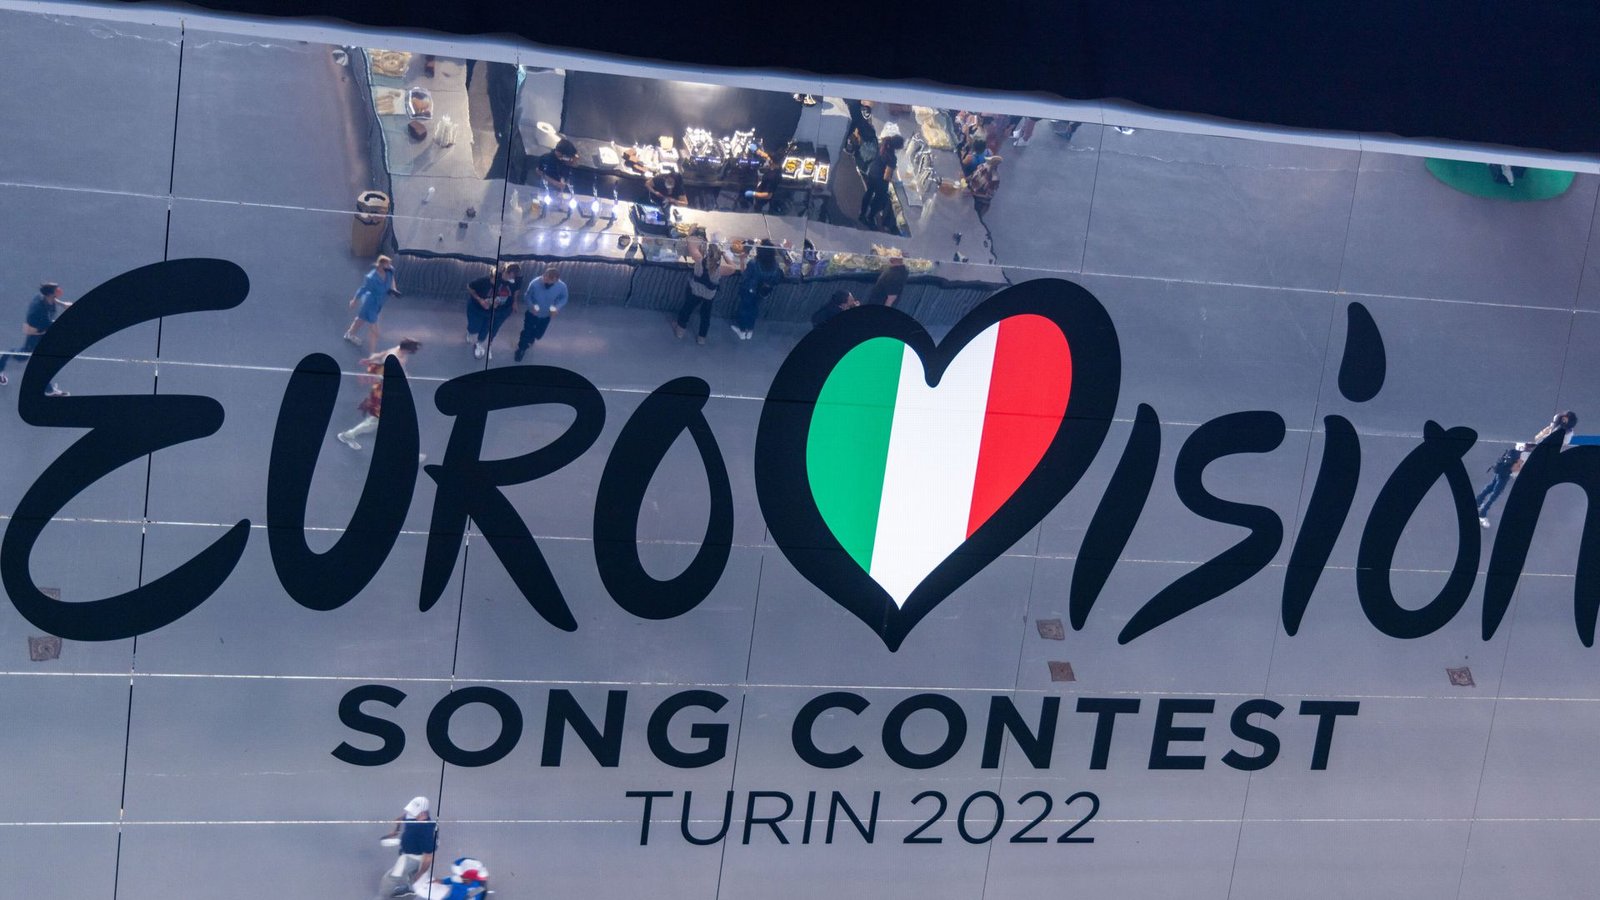 Großer Empfang: der Eurovision Song Contest 2022 steigt in TurinFoto: dpa/Jens Büttner